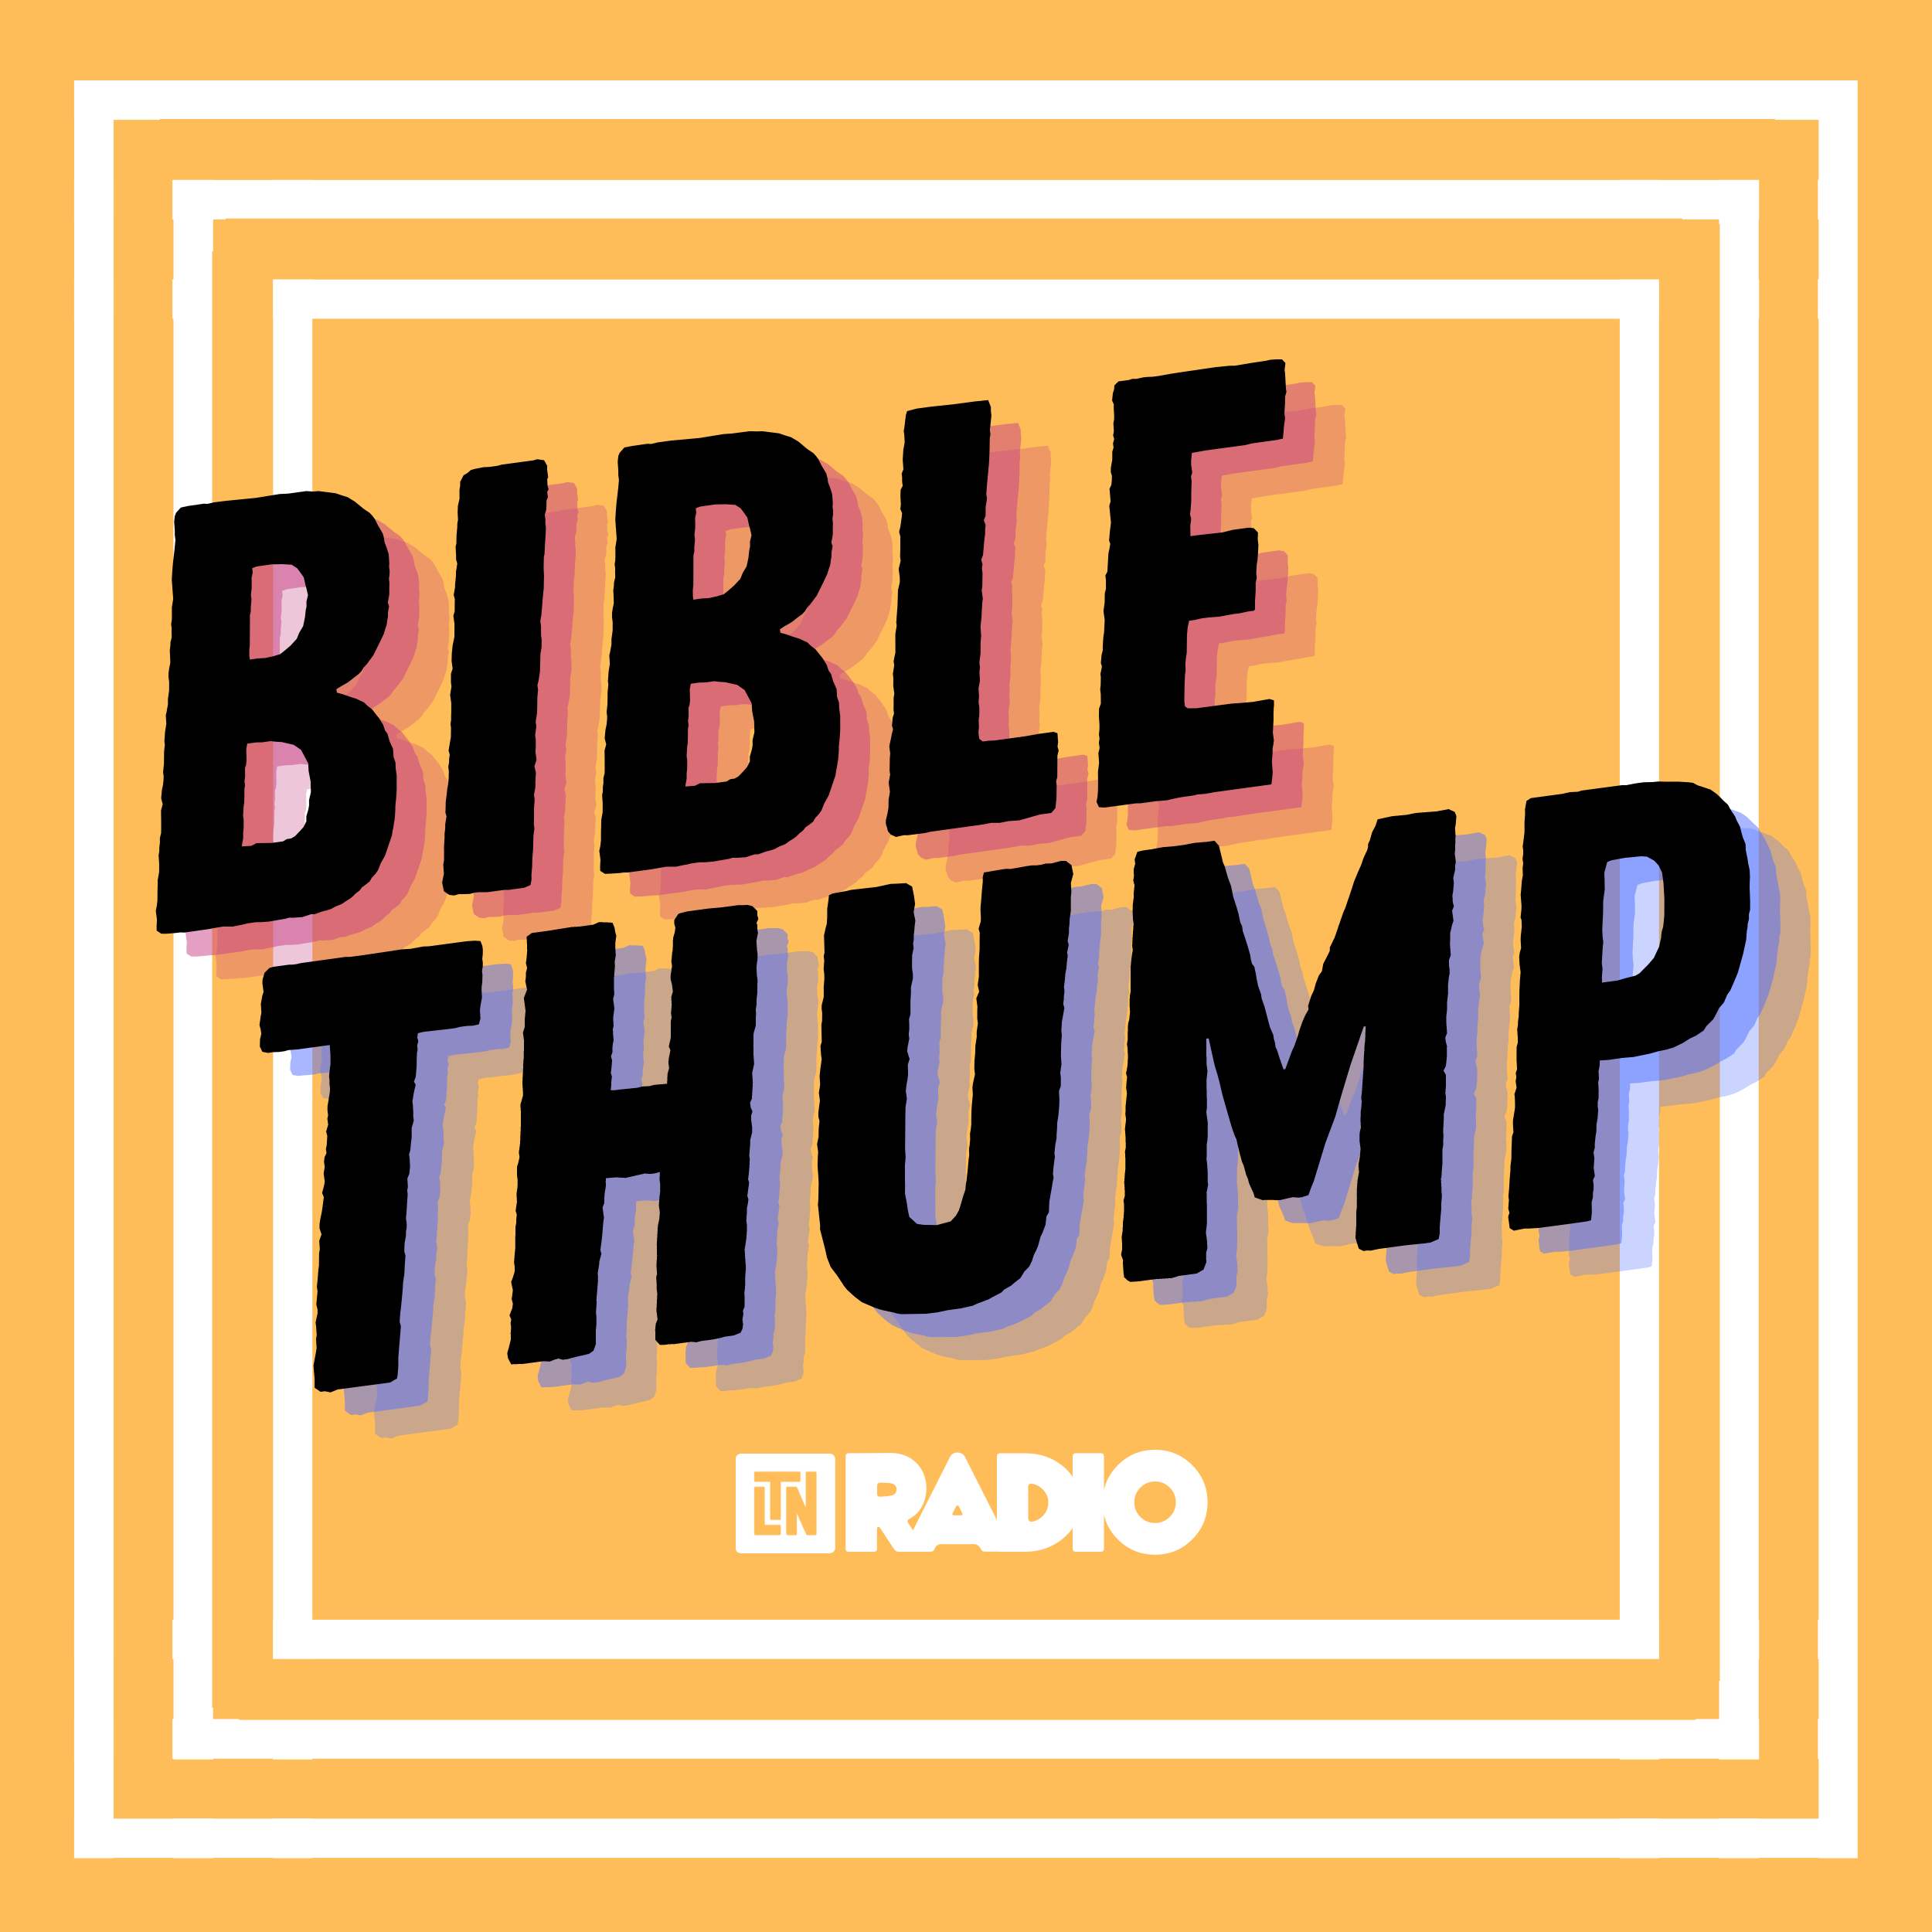 Bible Thump | Creation Care